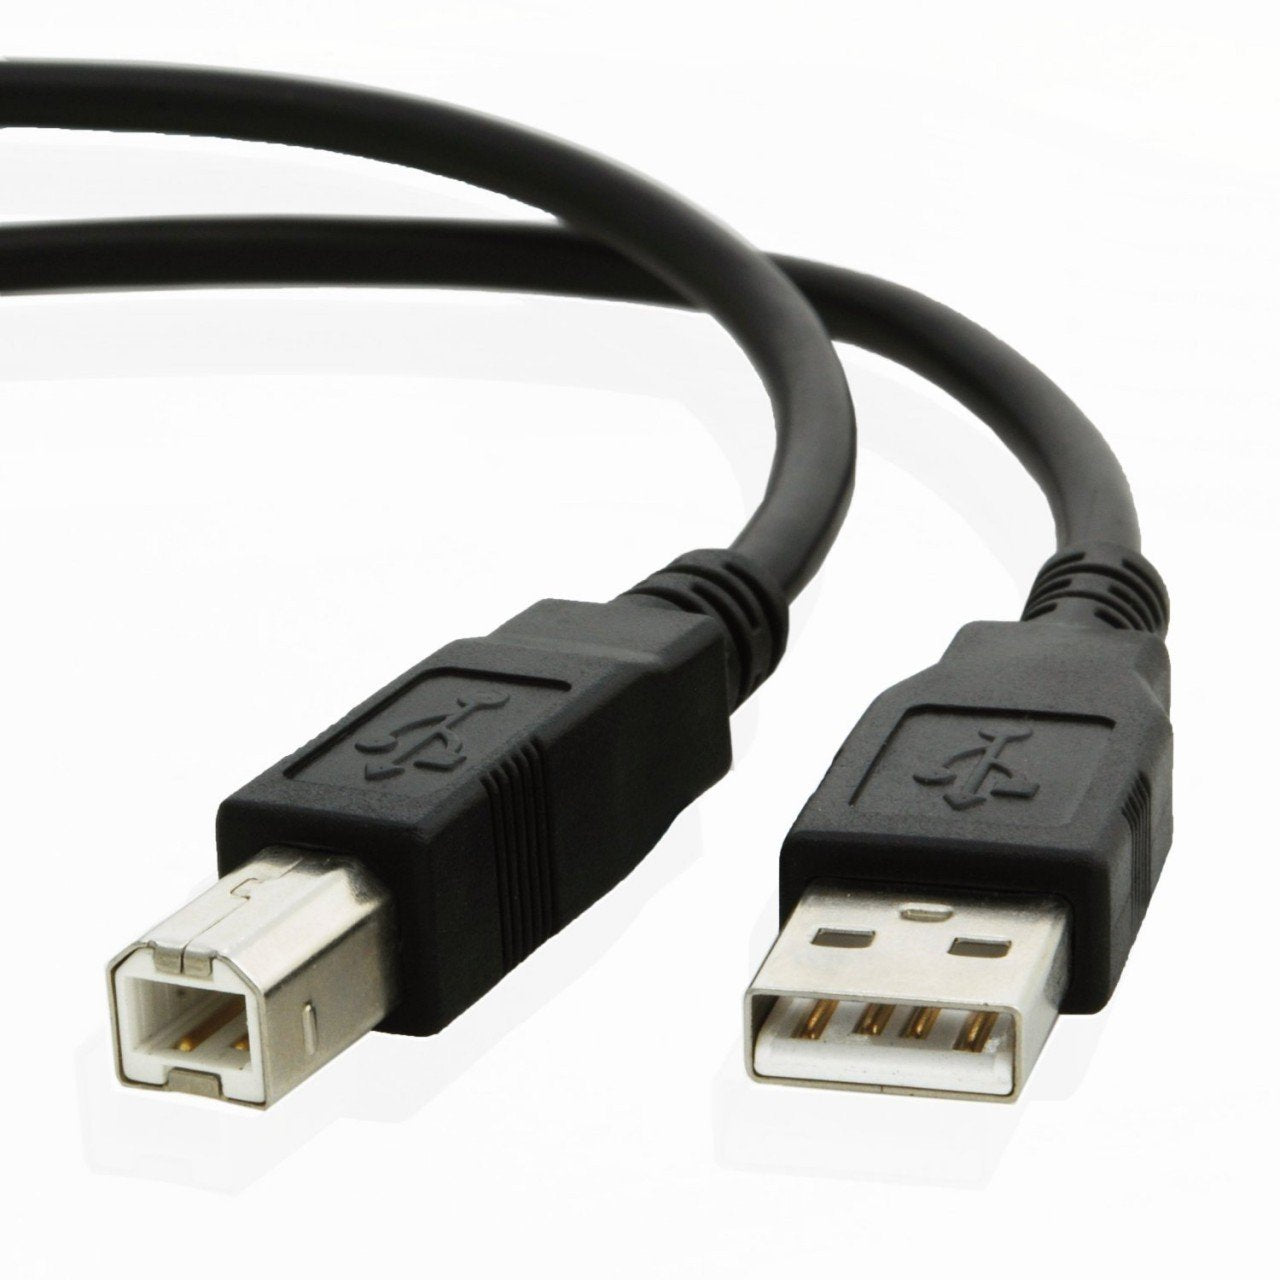 USB cable for Canon PIXMA MX725